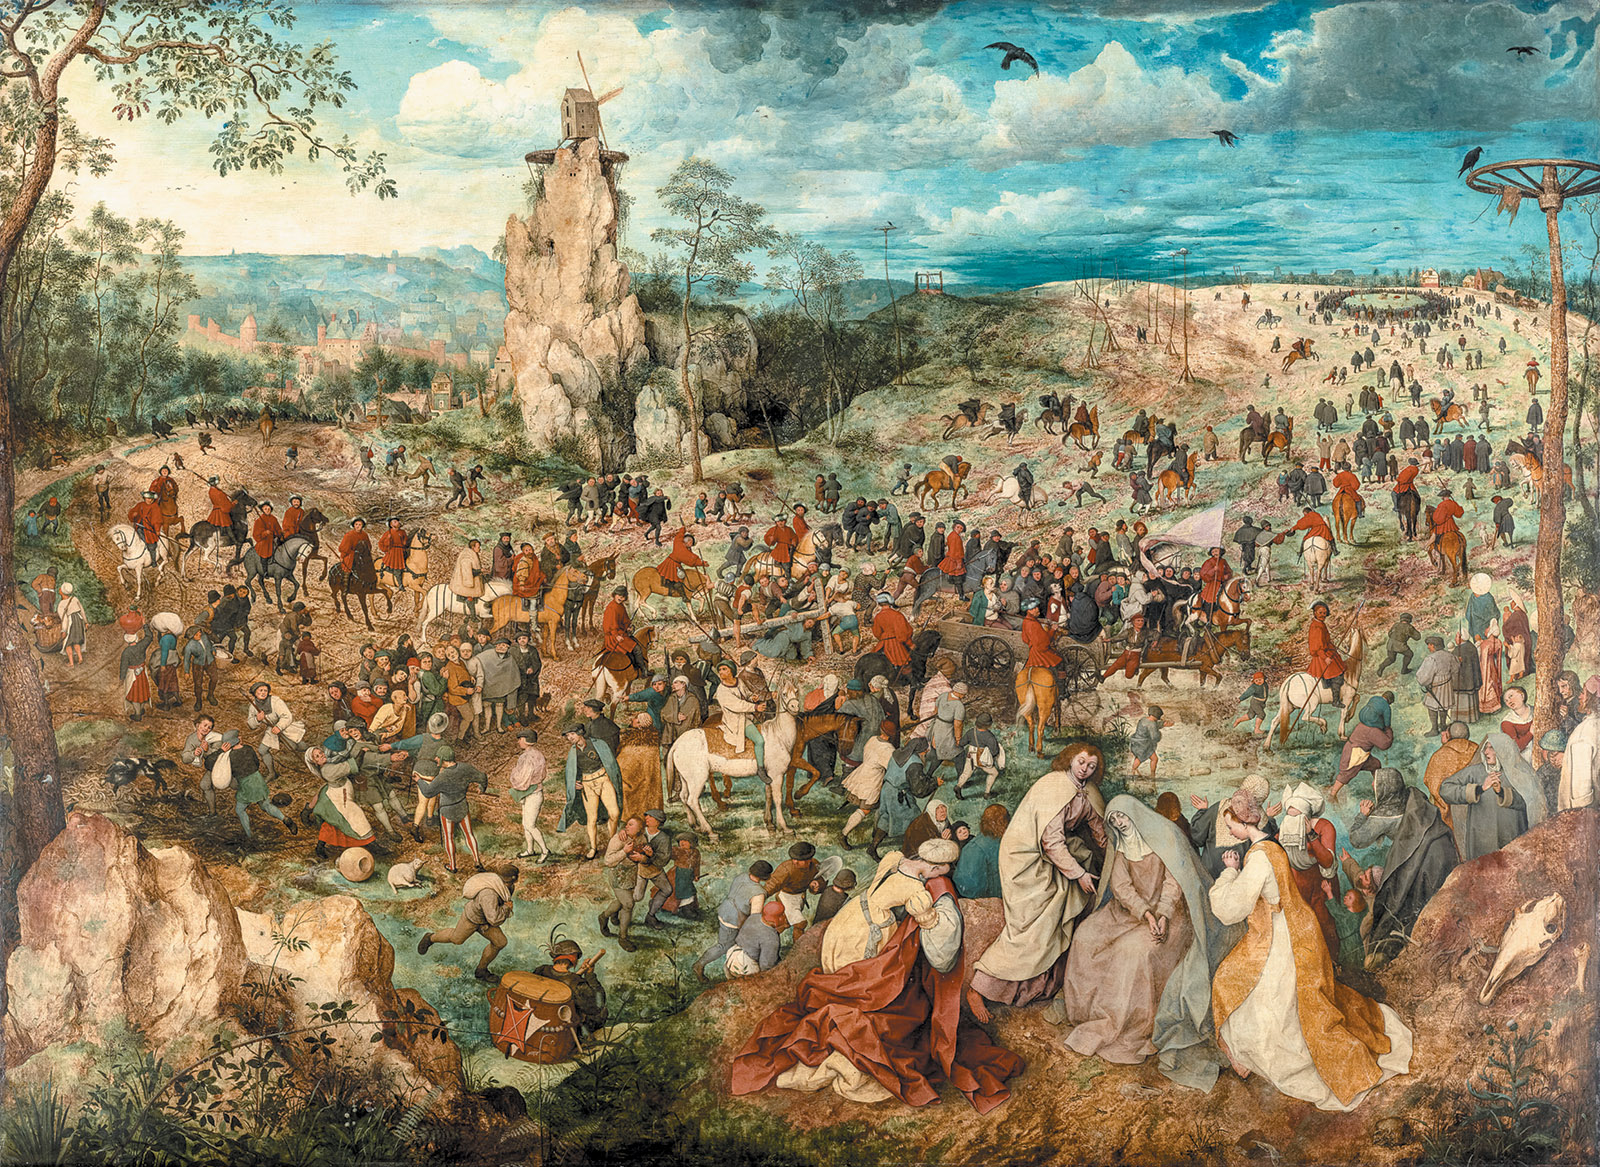 Pieter Bruegel the Elder: Christ Carrying the Cross, 1564